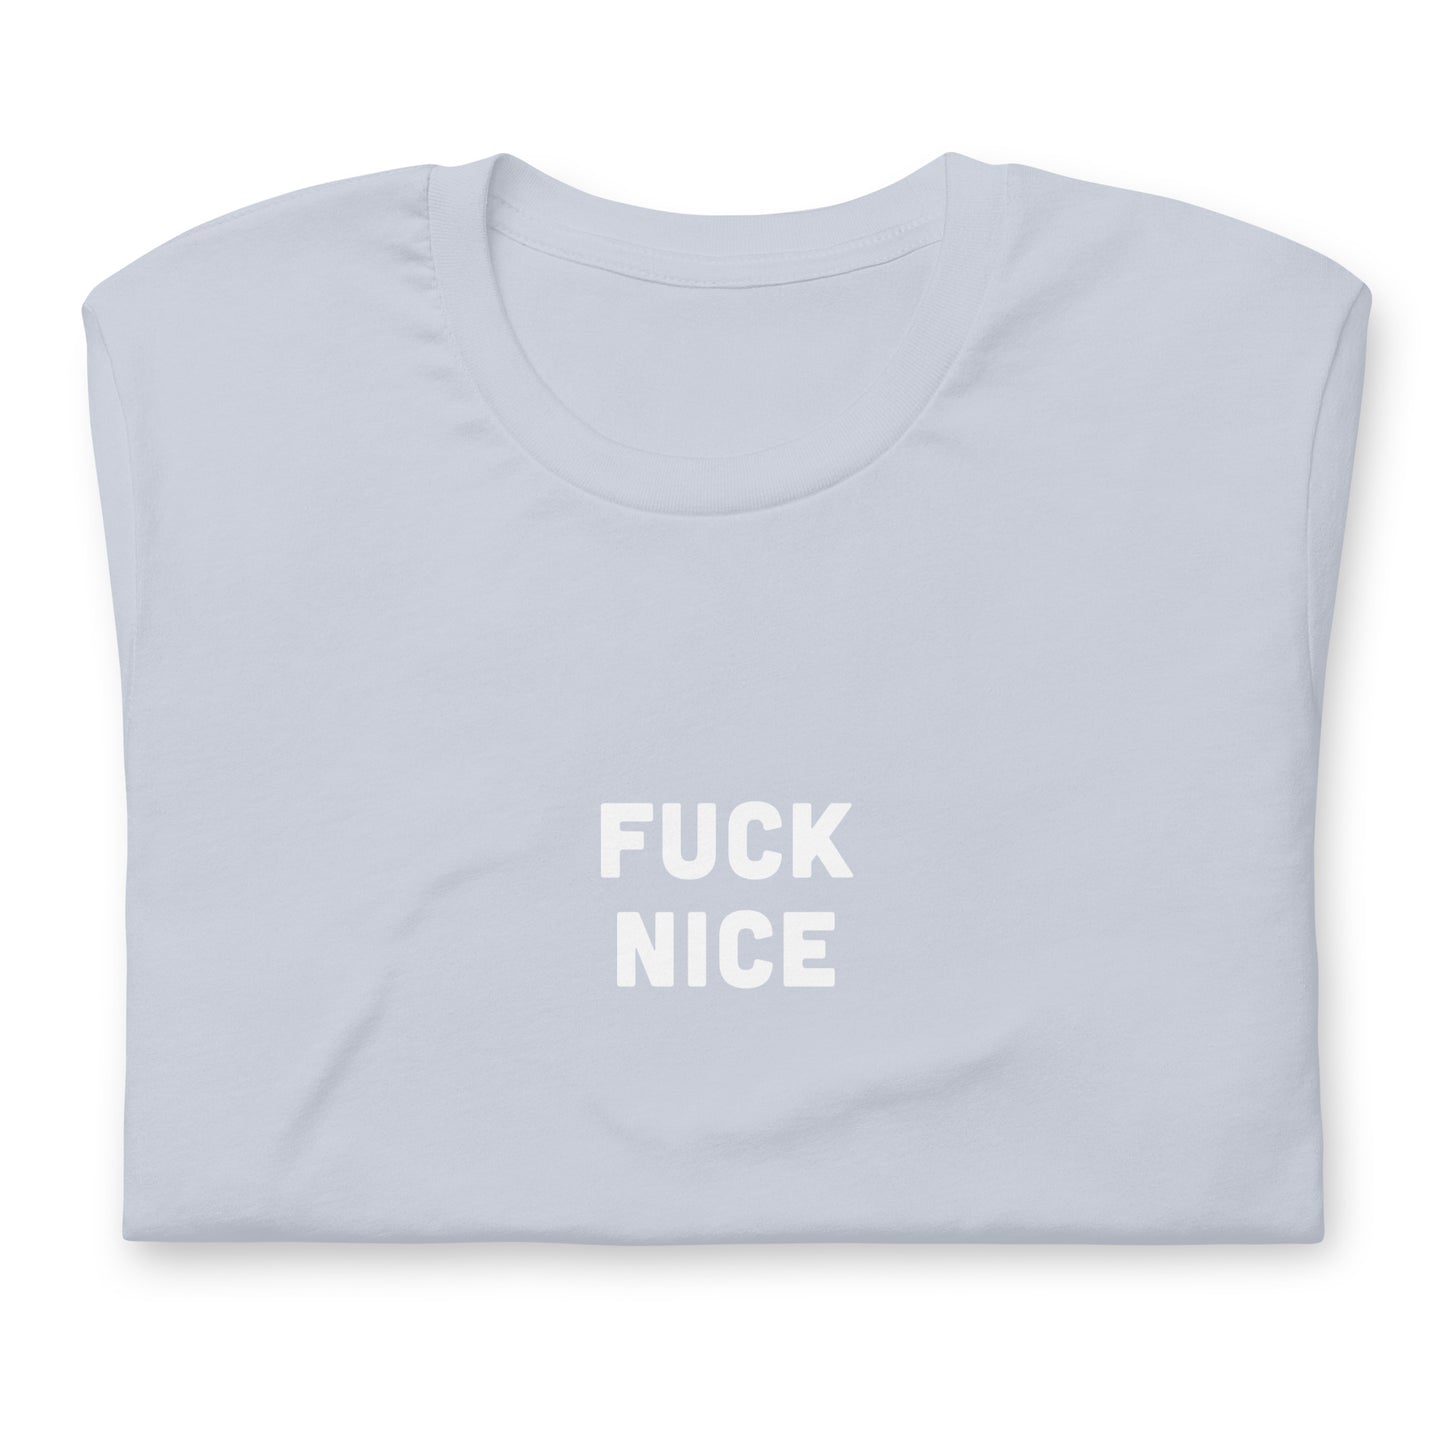 Fuck Nice T-Shirt Size S Color Asphalt